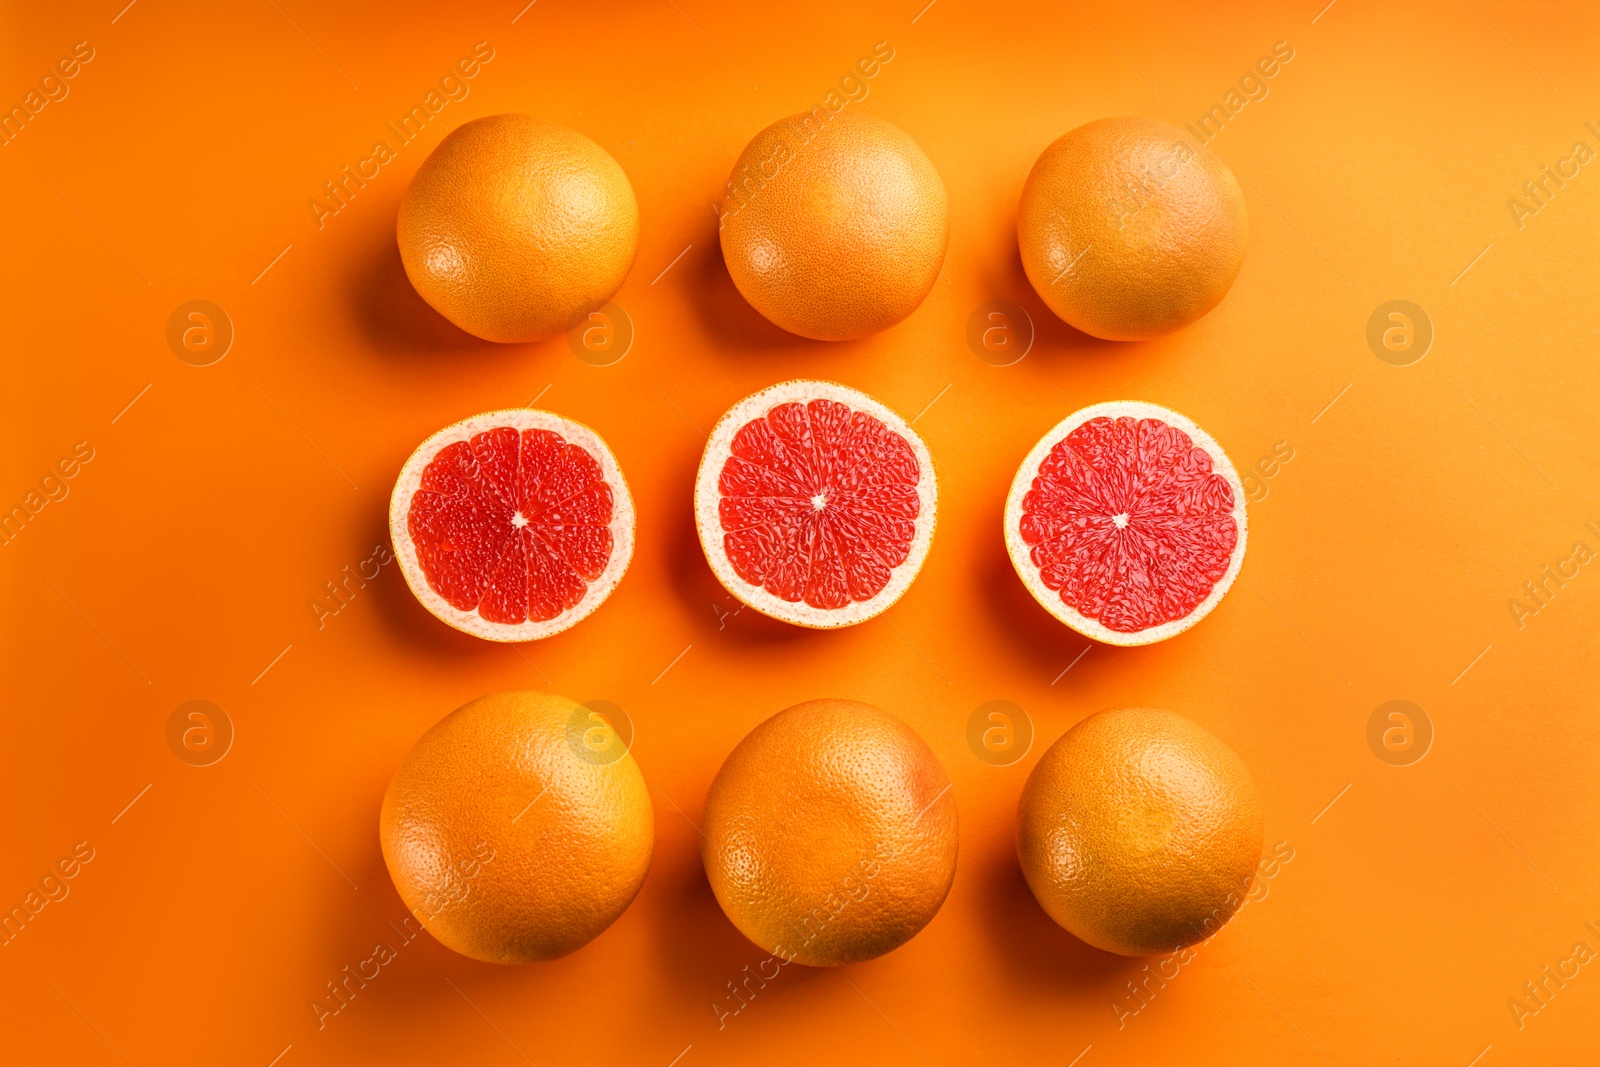 Photo of Cut and whole ripe grapefruits on orange background, flat lay